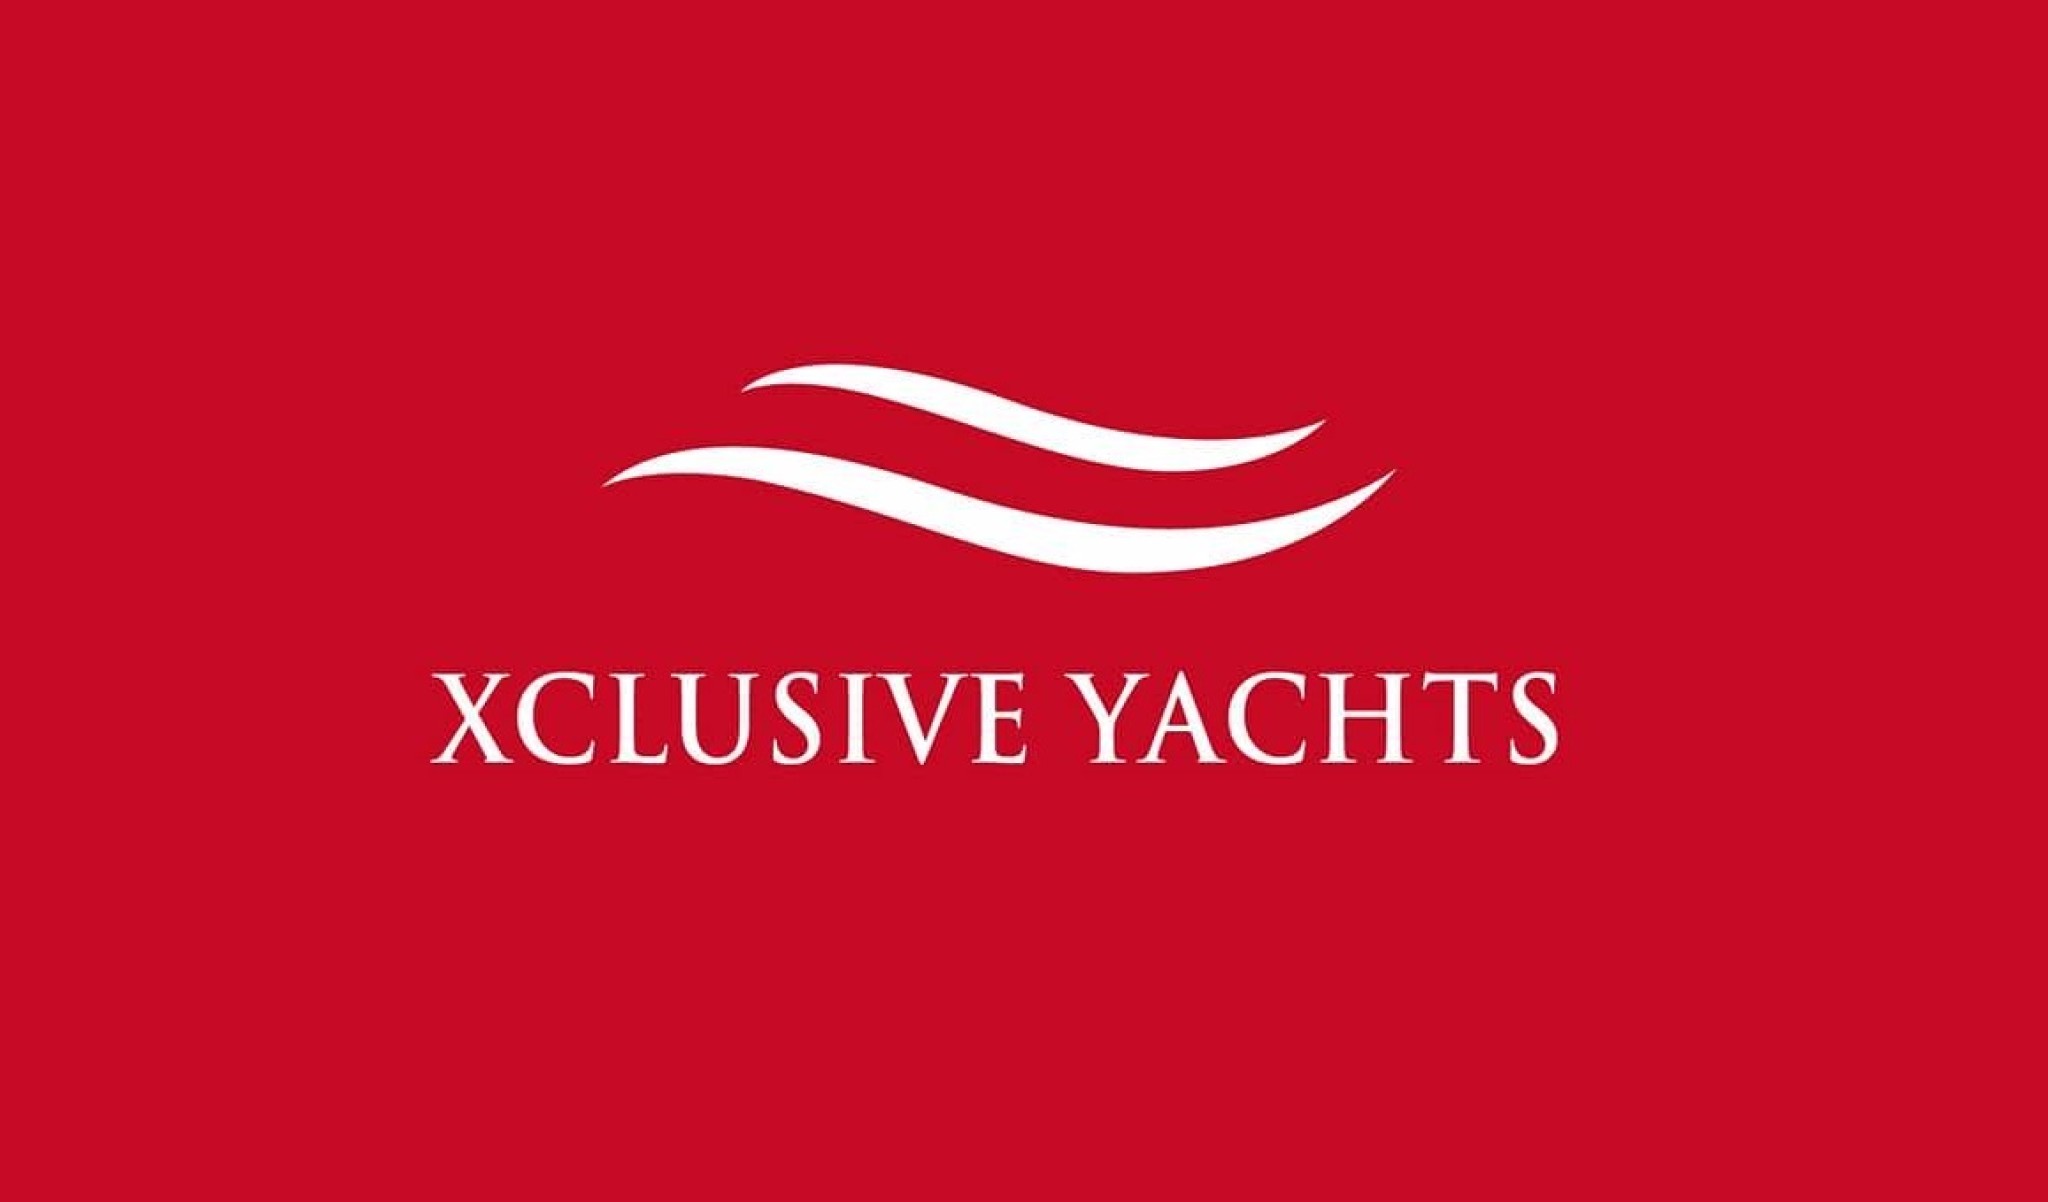 Xclusive Yachts